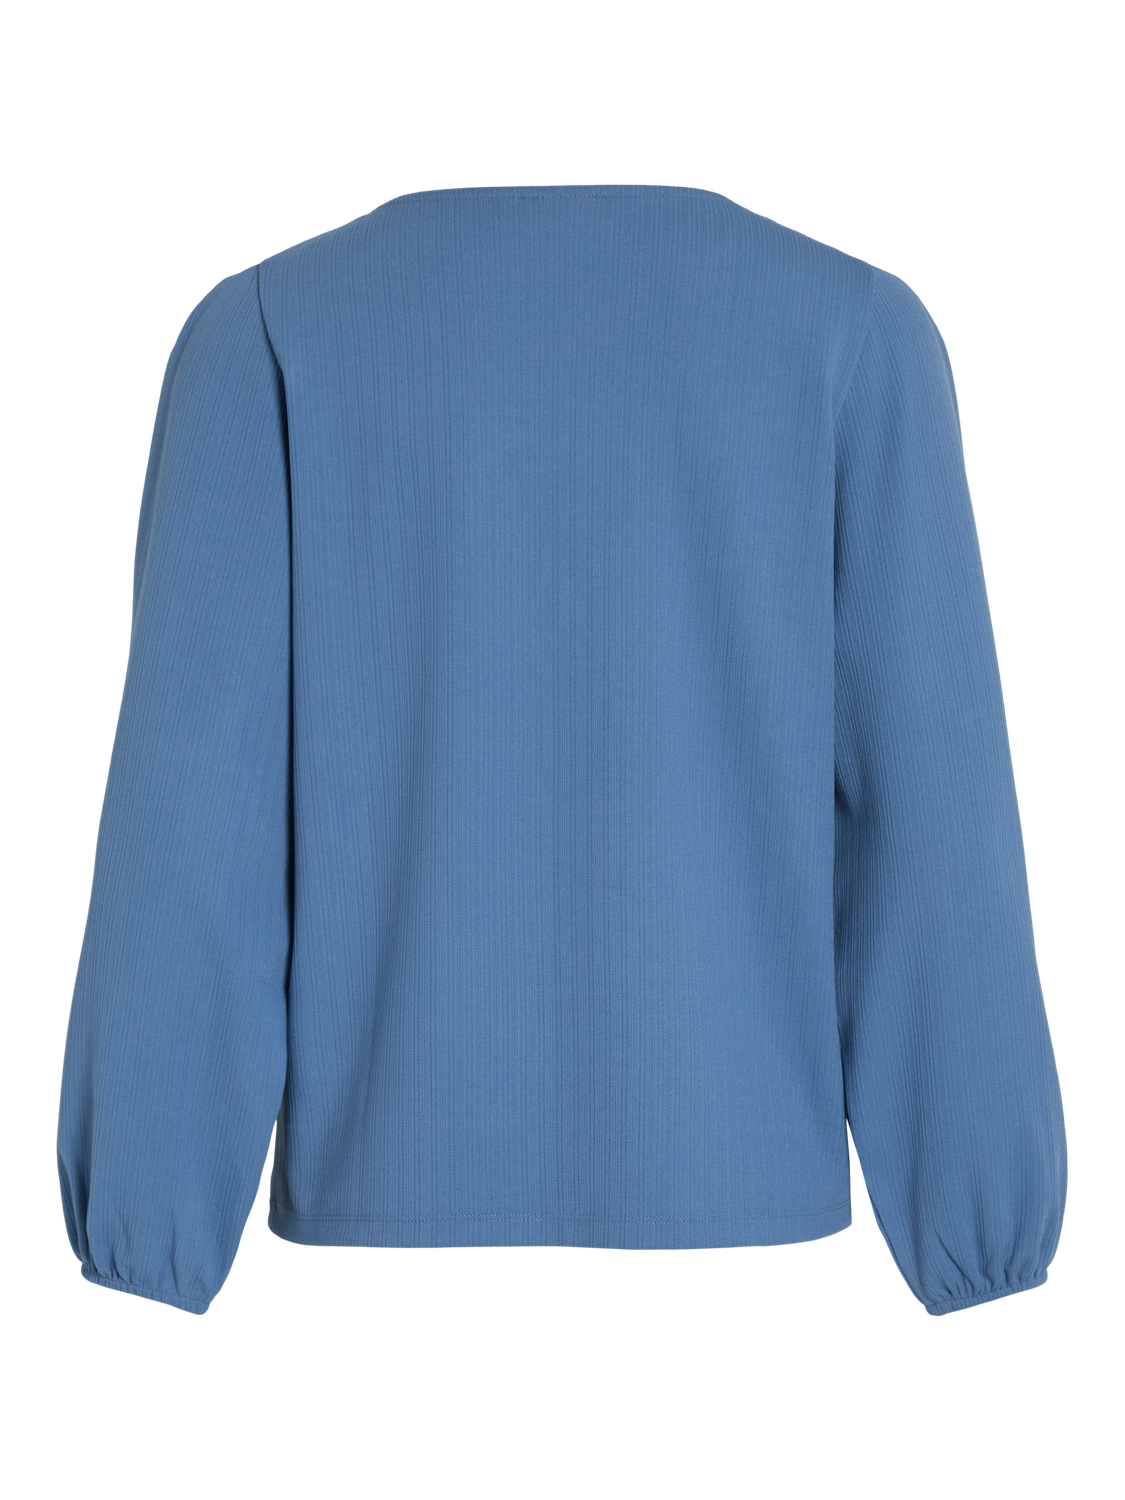 VIMELONIE T-Shirts & Tops - Coronet Blue